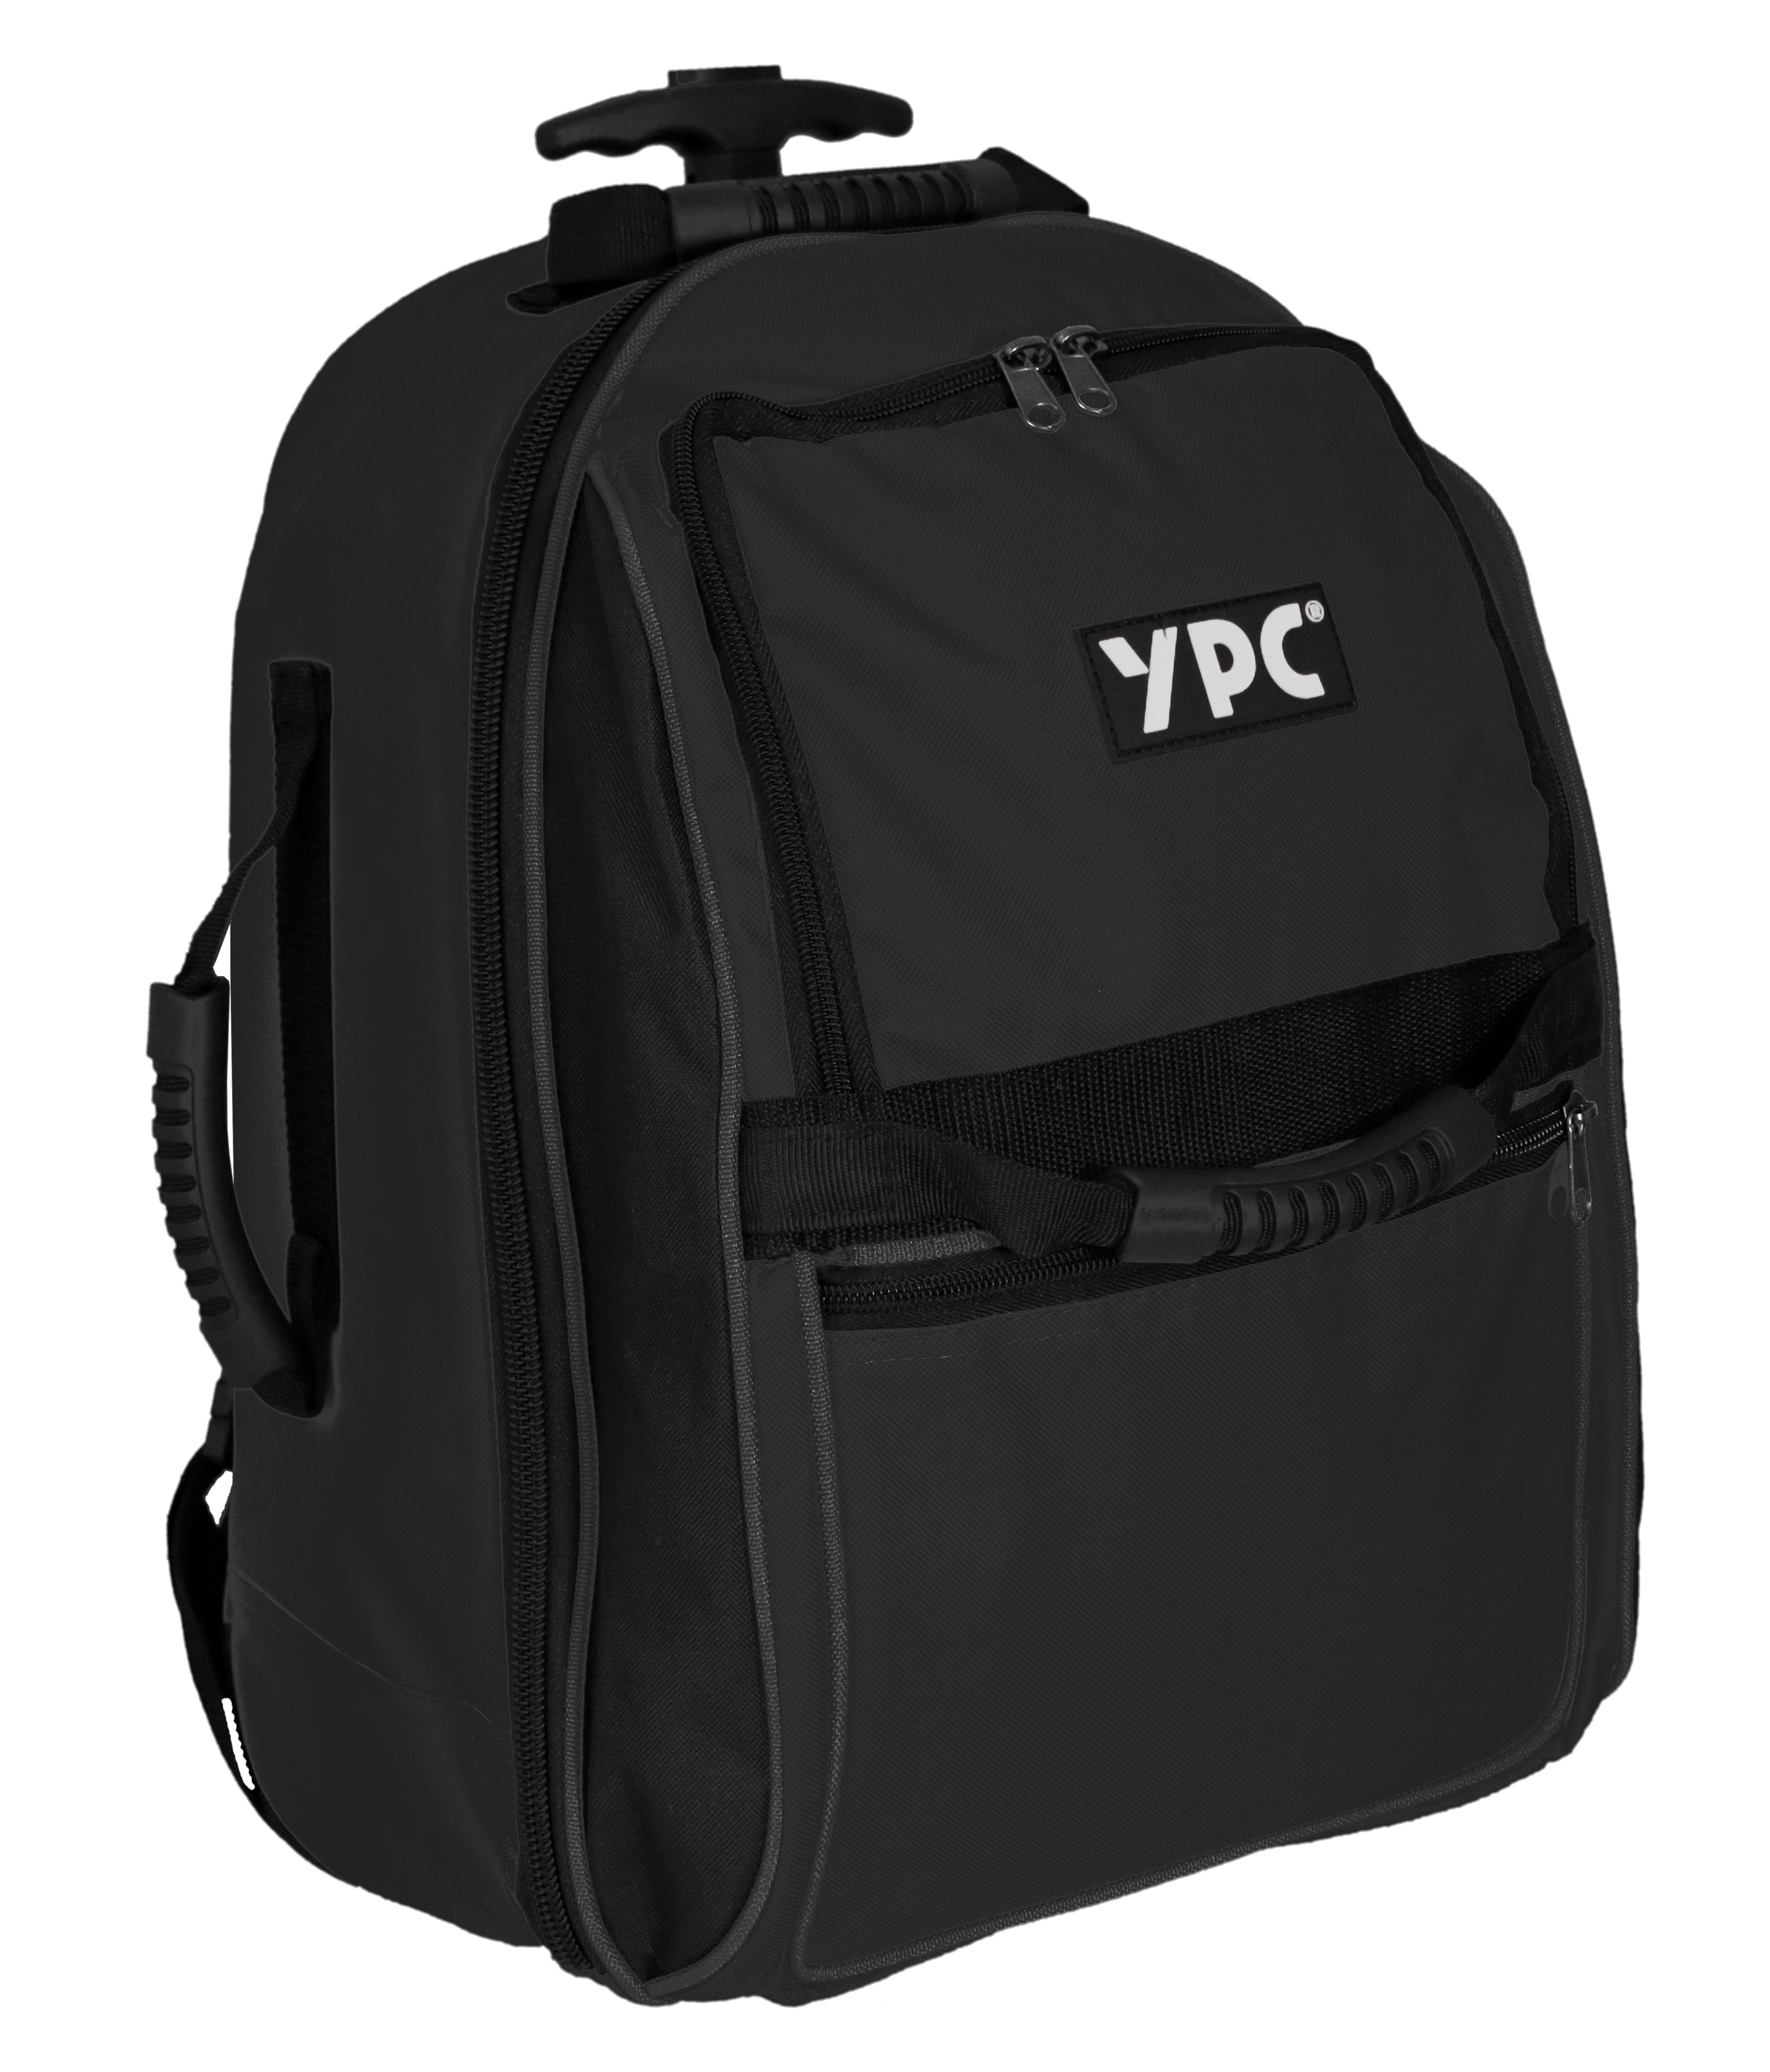 "Juggernaut" trolley tool backpack XXL, black, 54x36x25cm, 15 kg load capacity